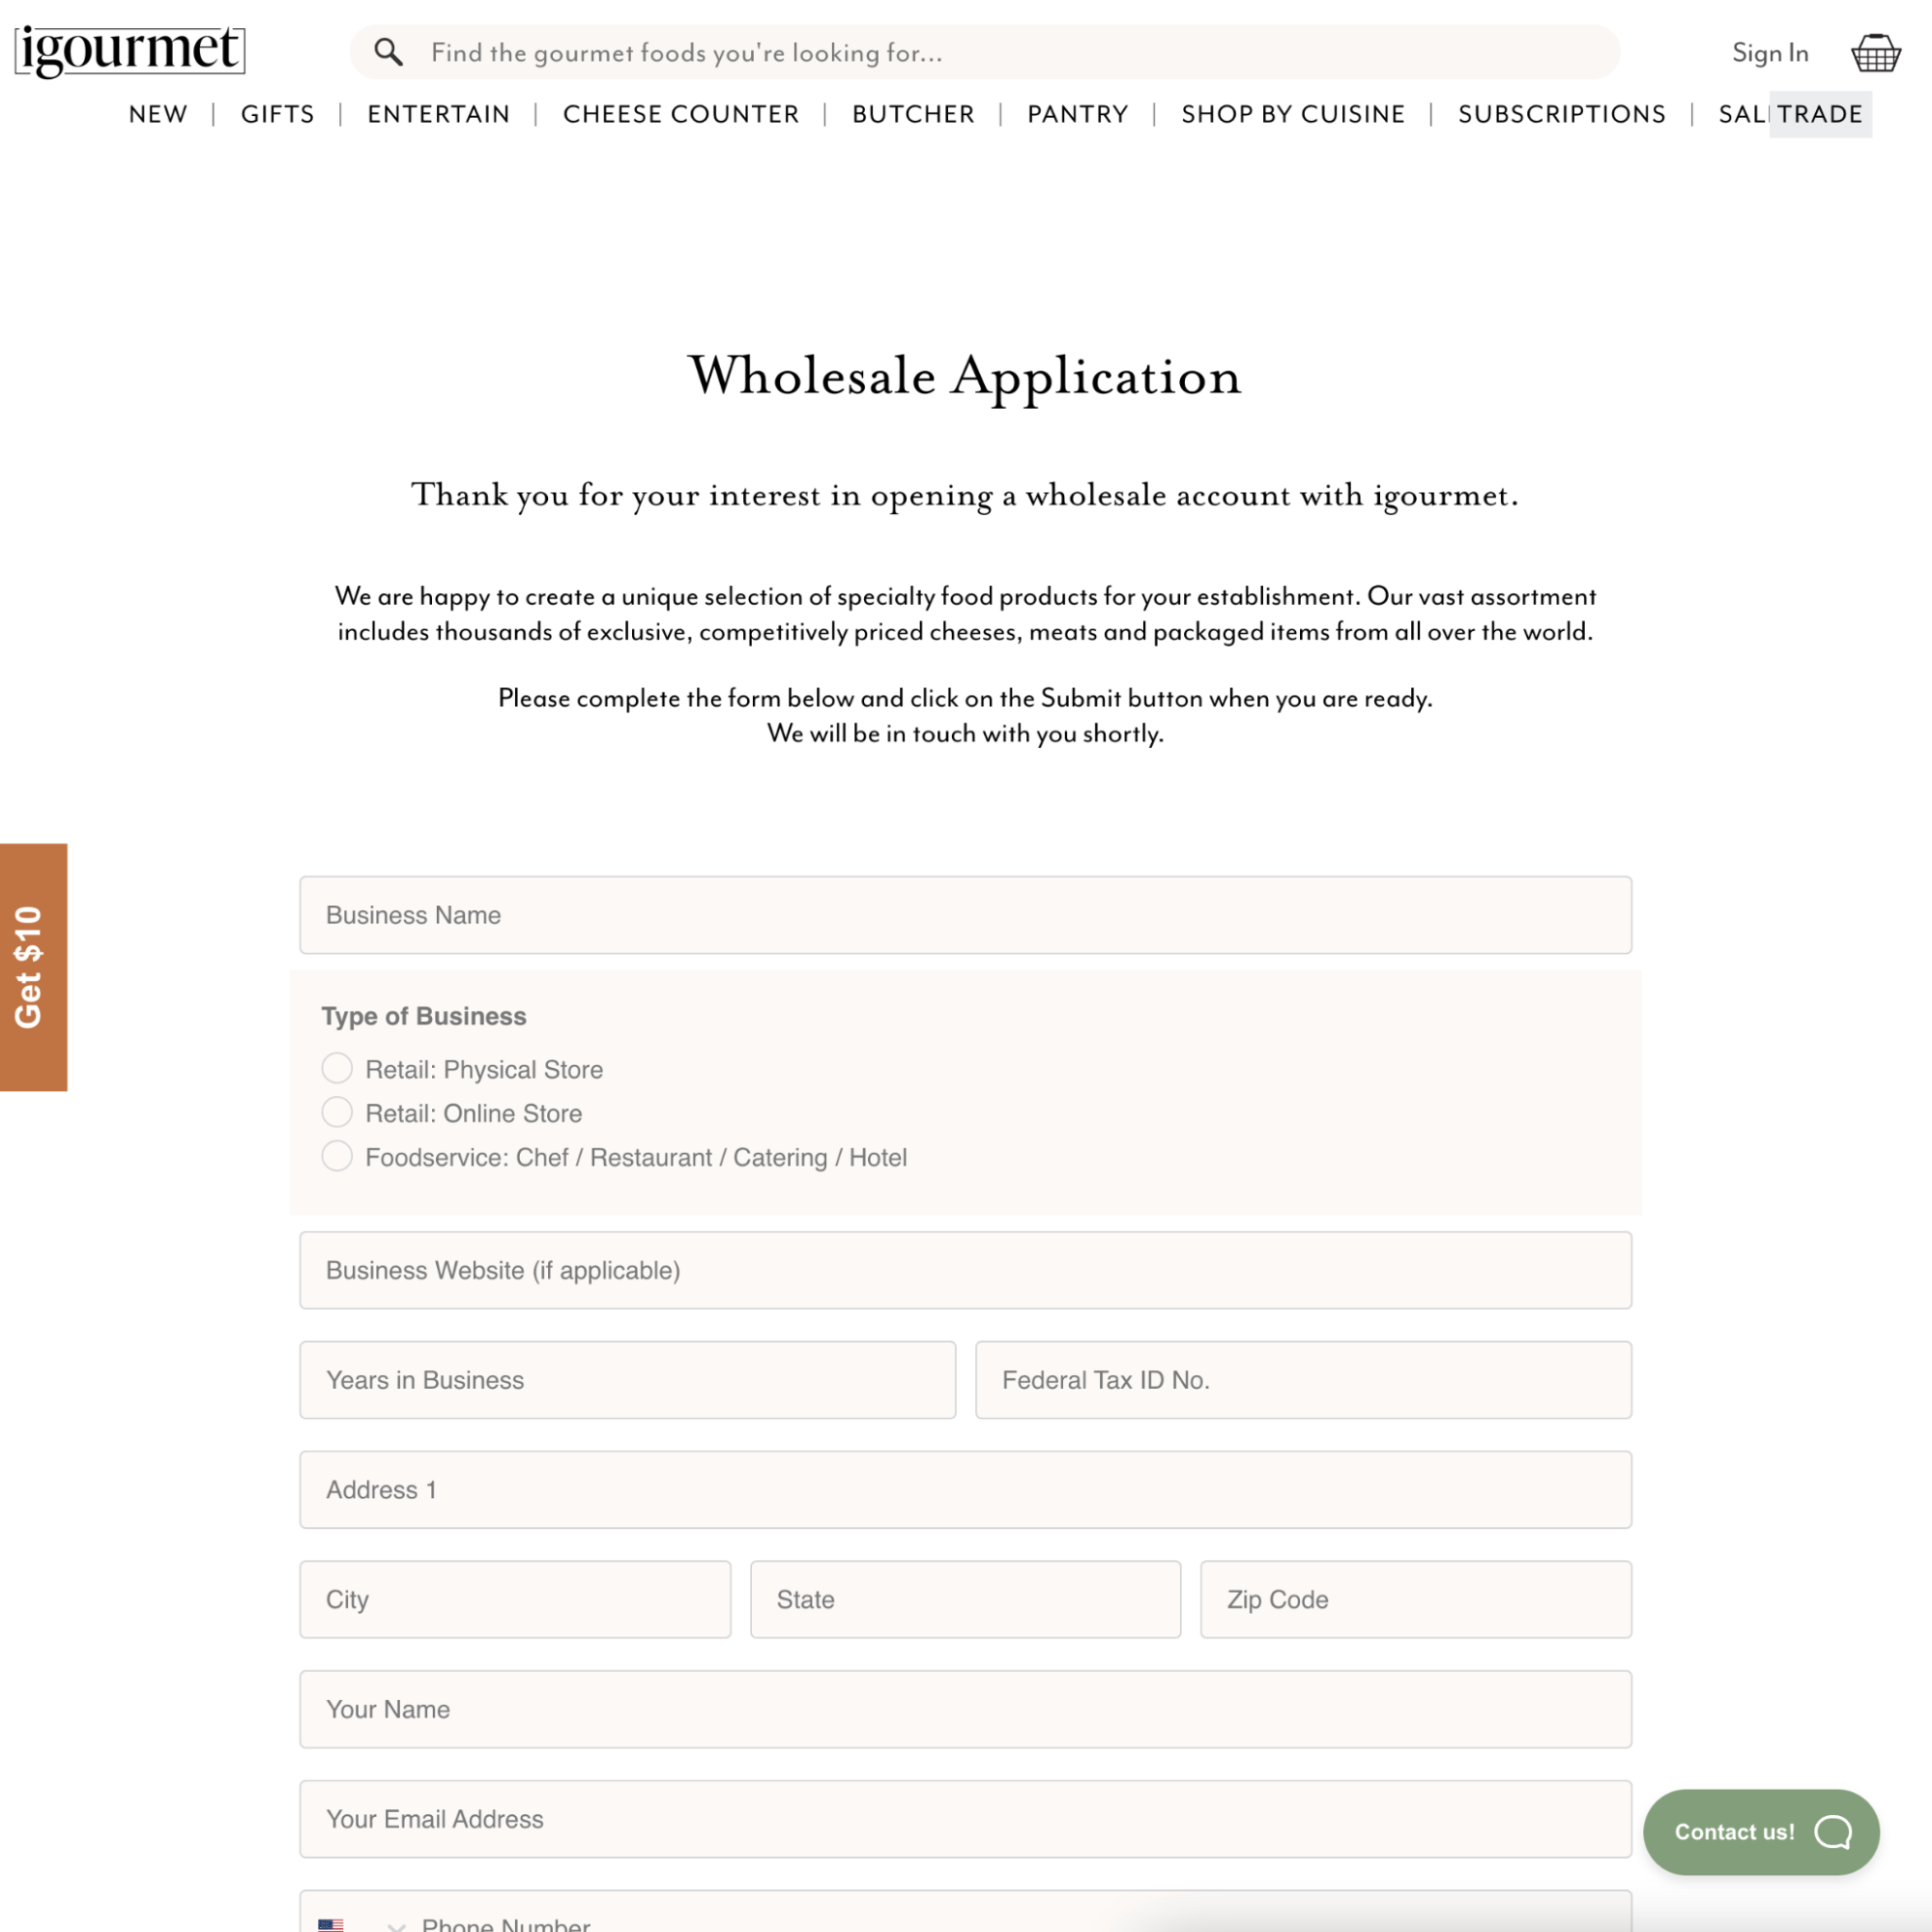 igourmet’s wholesale application on website